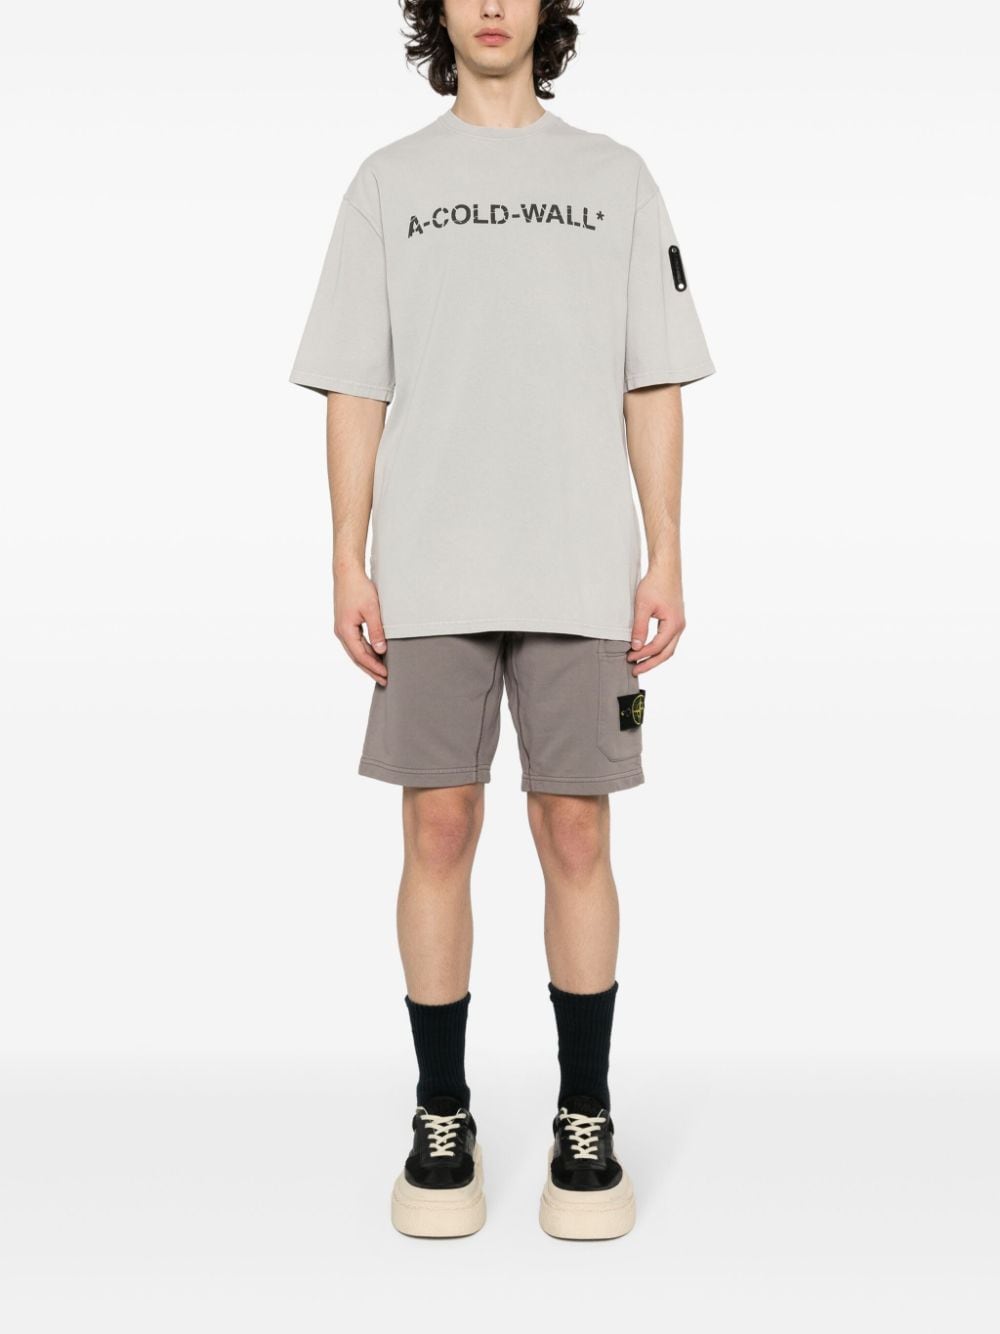 A-COLD-WALL* logo-printed cotton T-shirt - Grijs